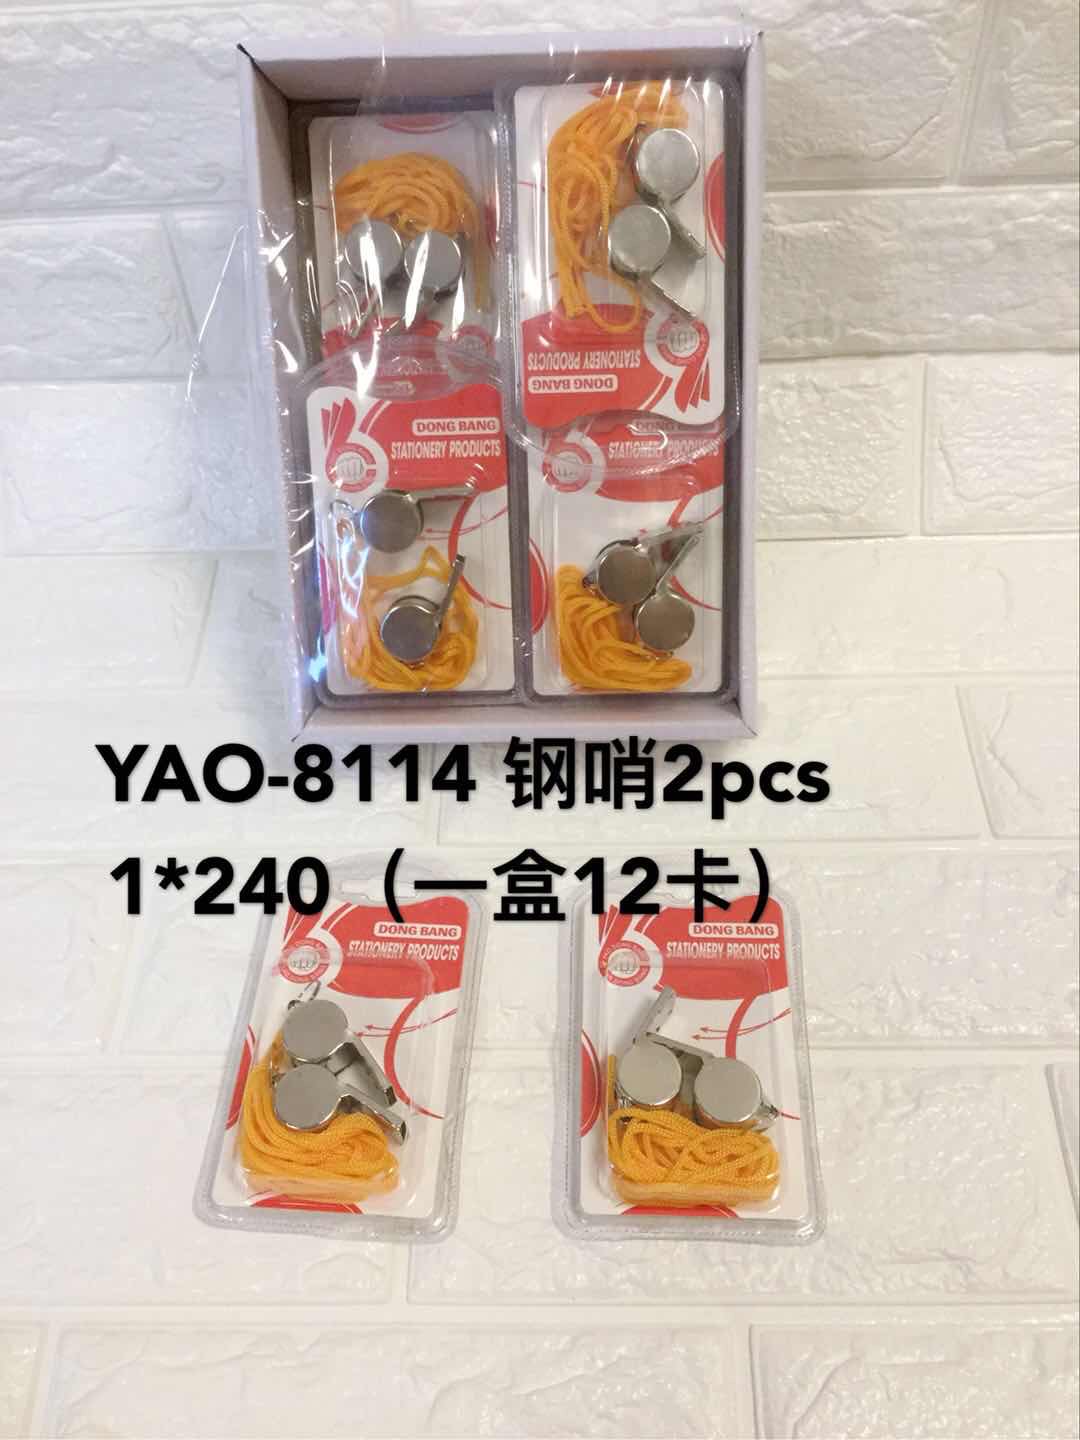 YAO-8114 钢哨2pcs